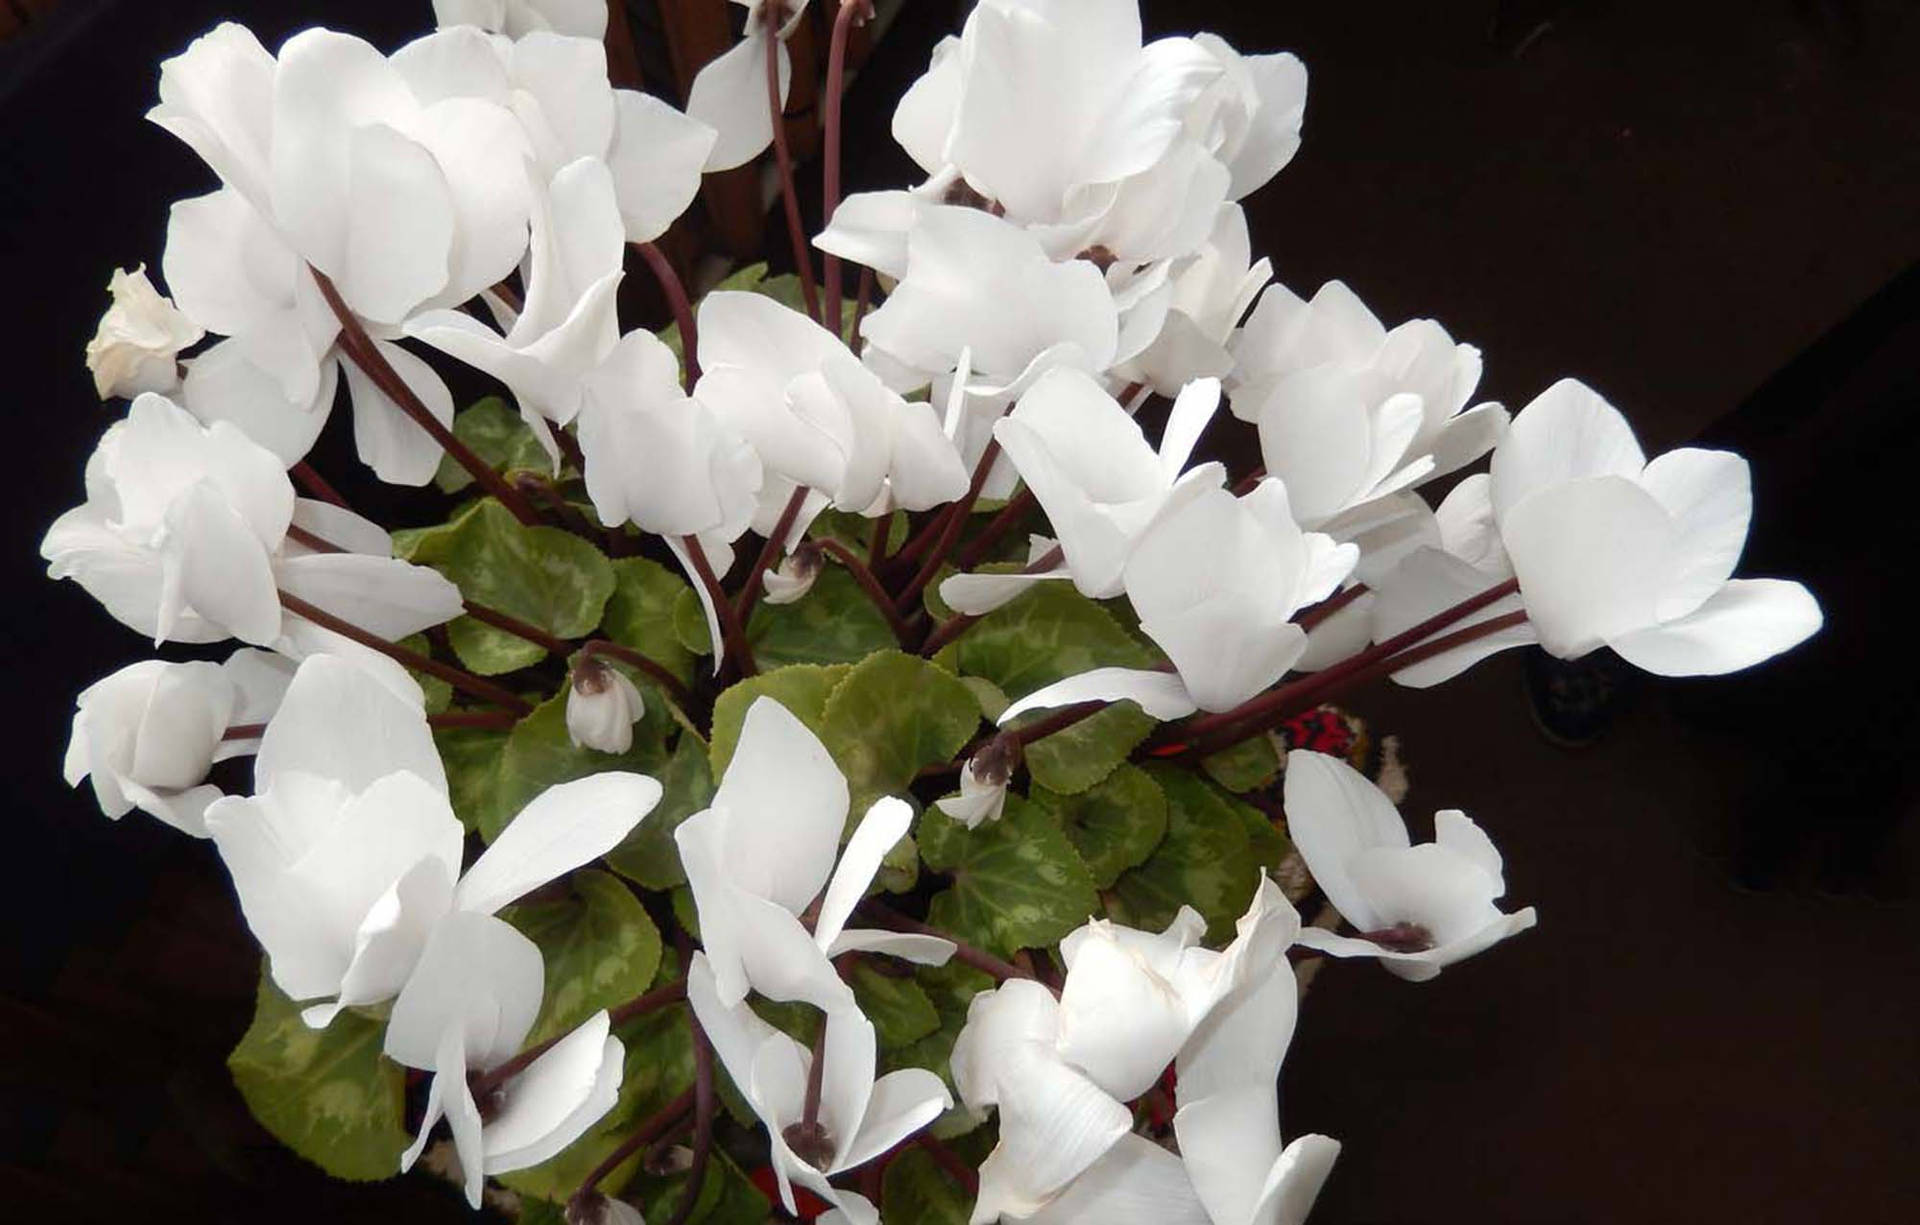 Stunning White Cyclamen in Full Bloom Wallpaper